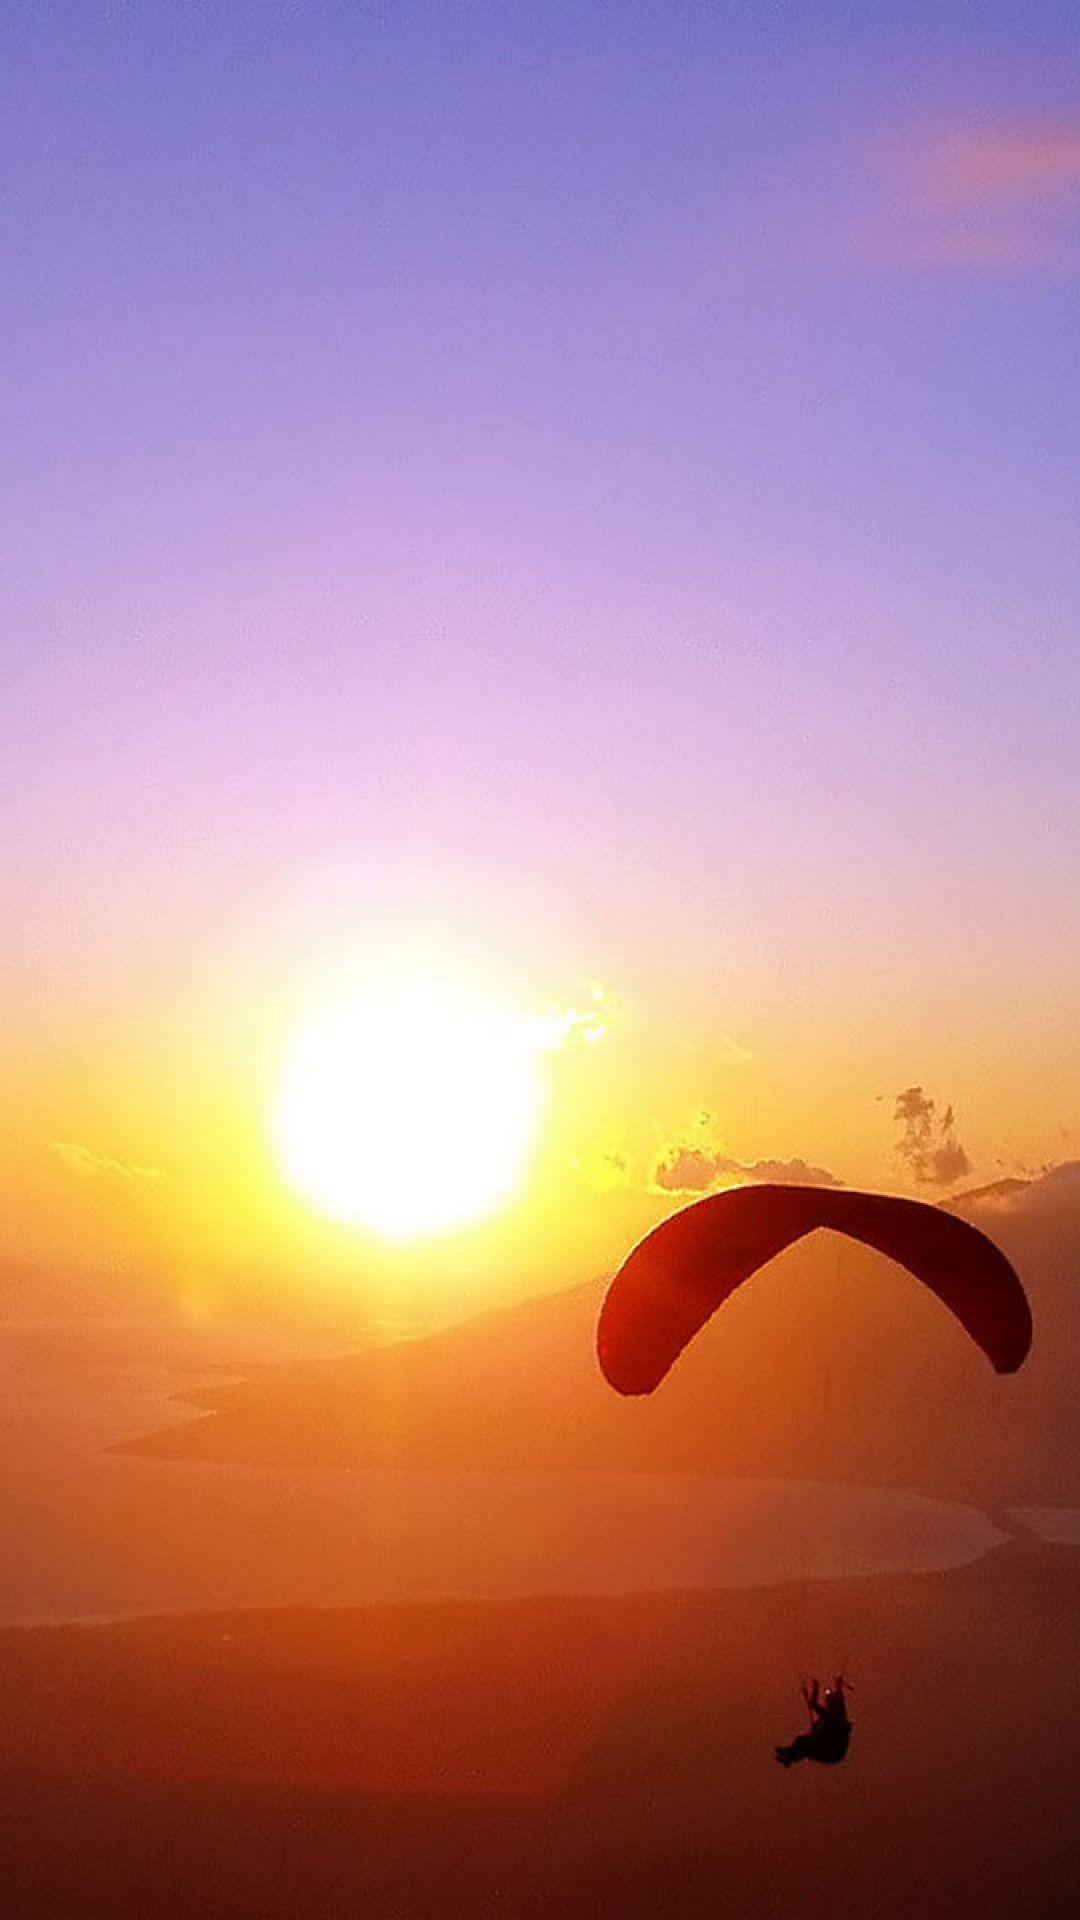 Paragliding Sunset iPhone 6 Plus Wallpaper